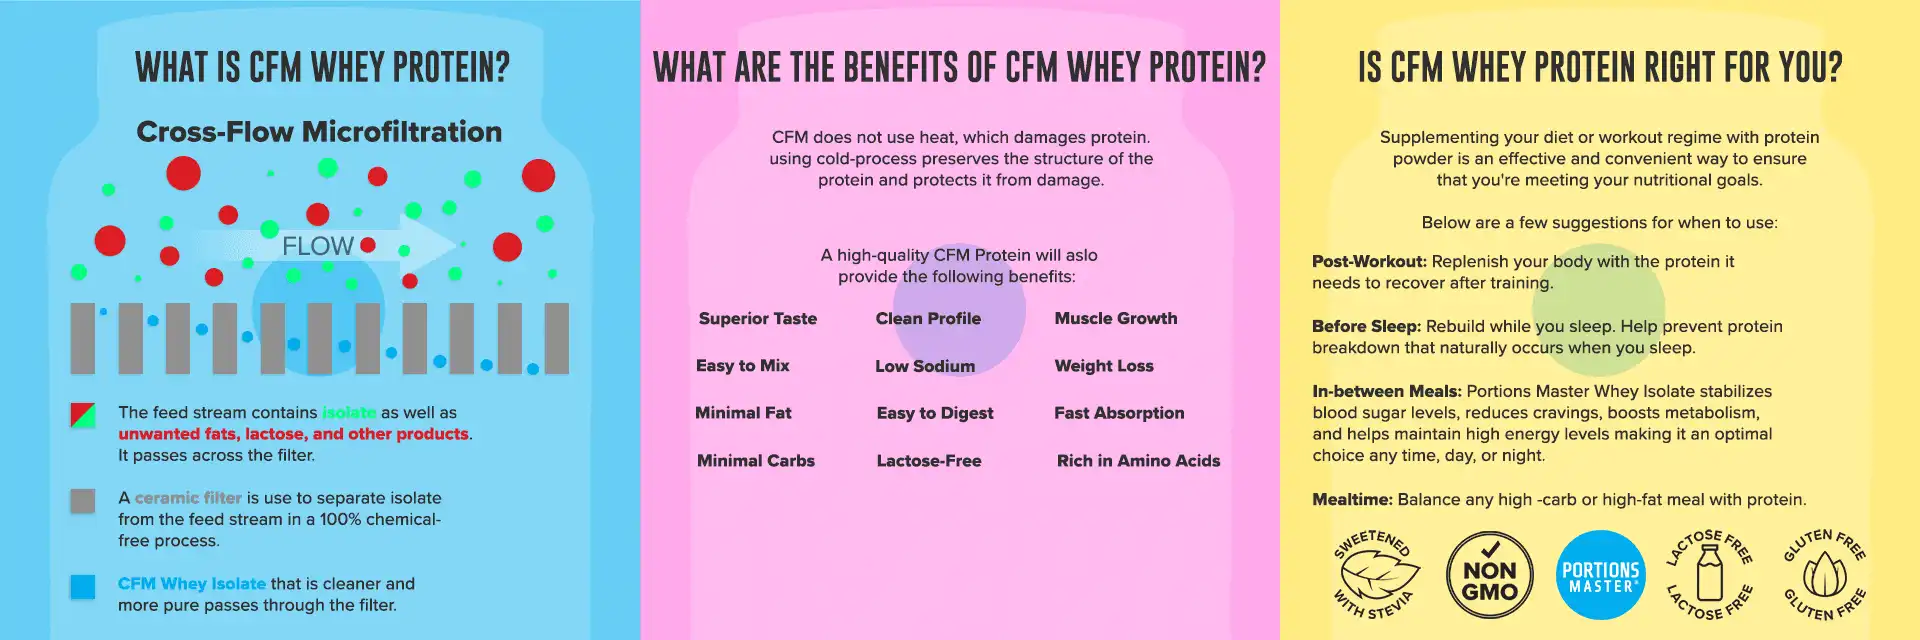 CFM Whey Benefits